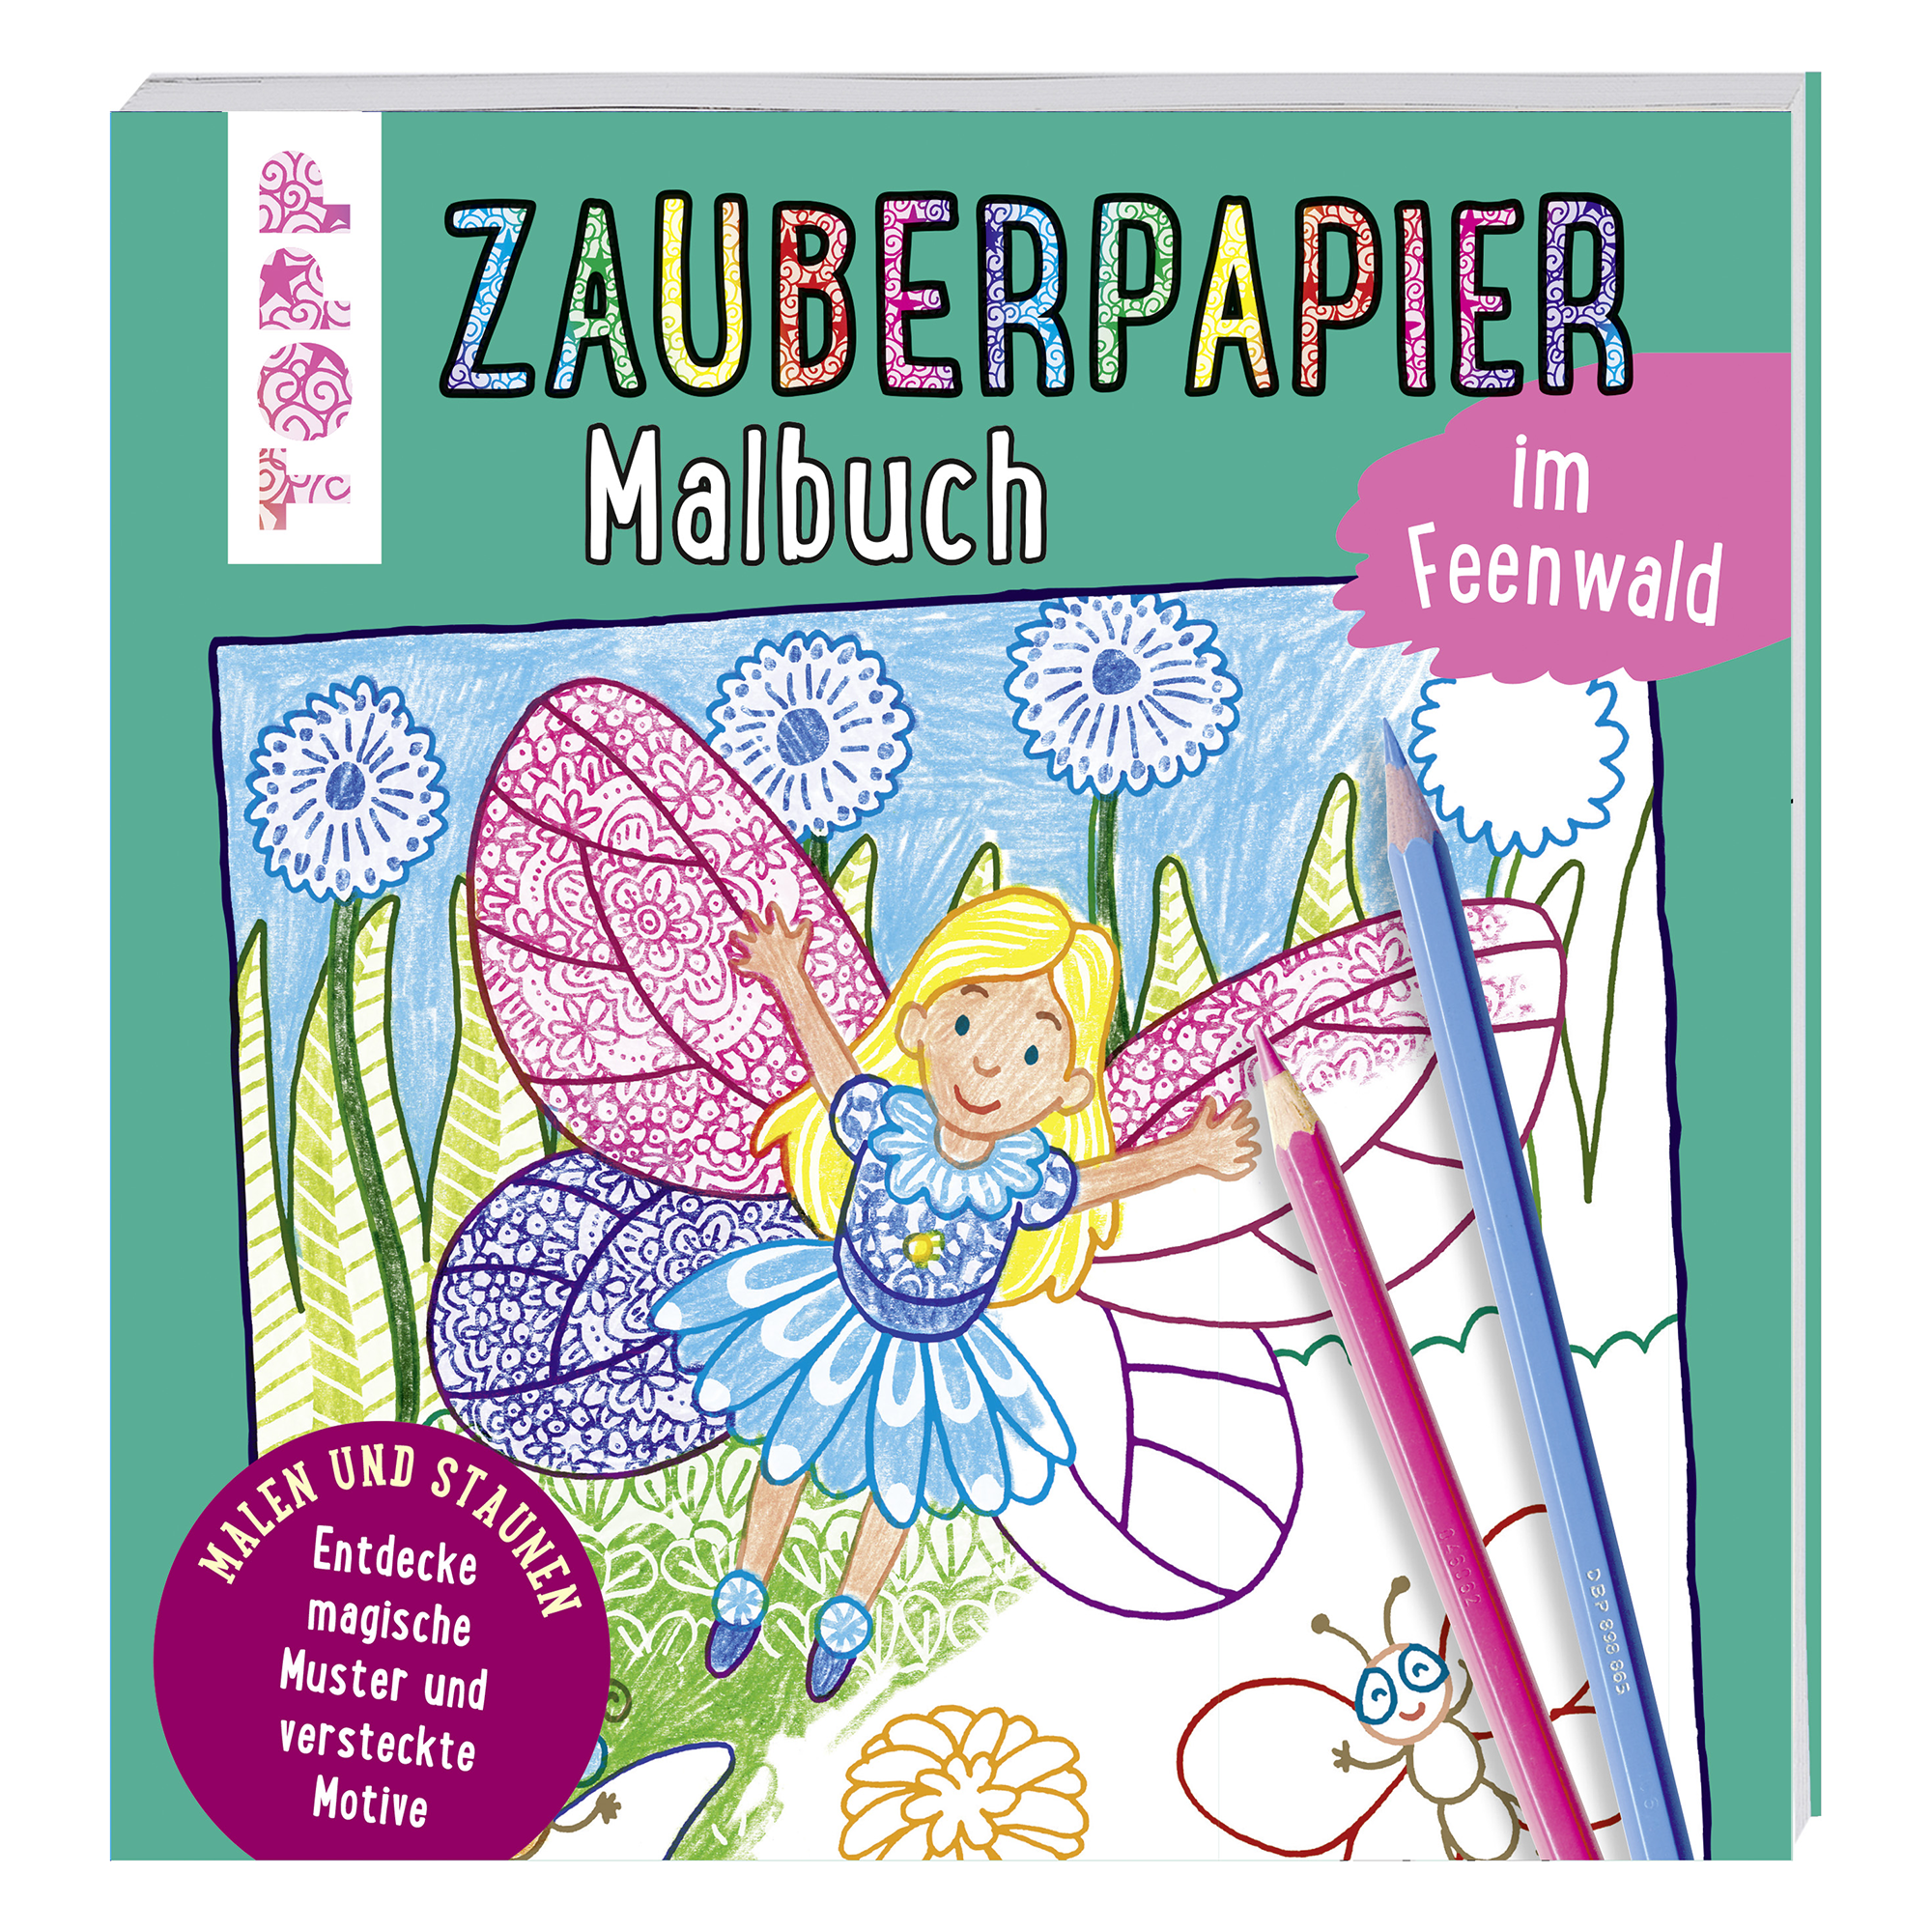 Zauberpapier Malbuch im Feenwald frechverlag 2000584478309 1